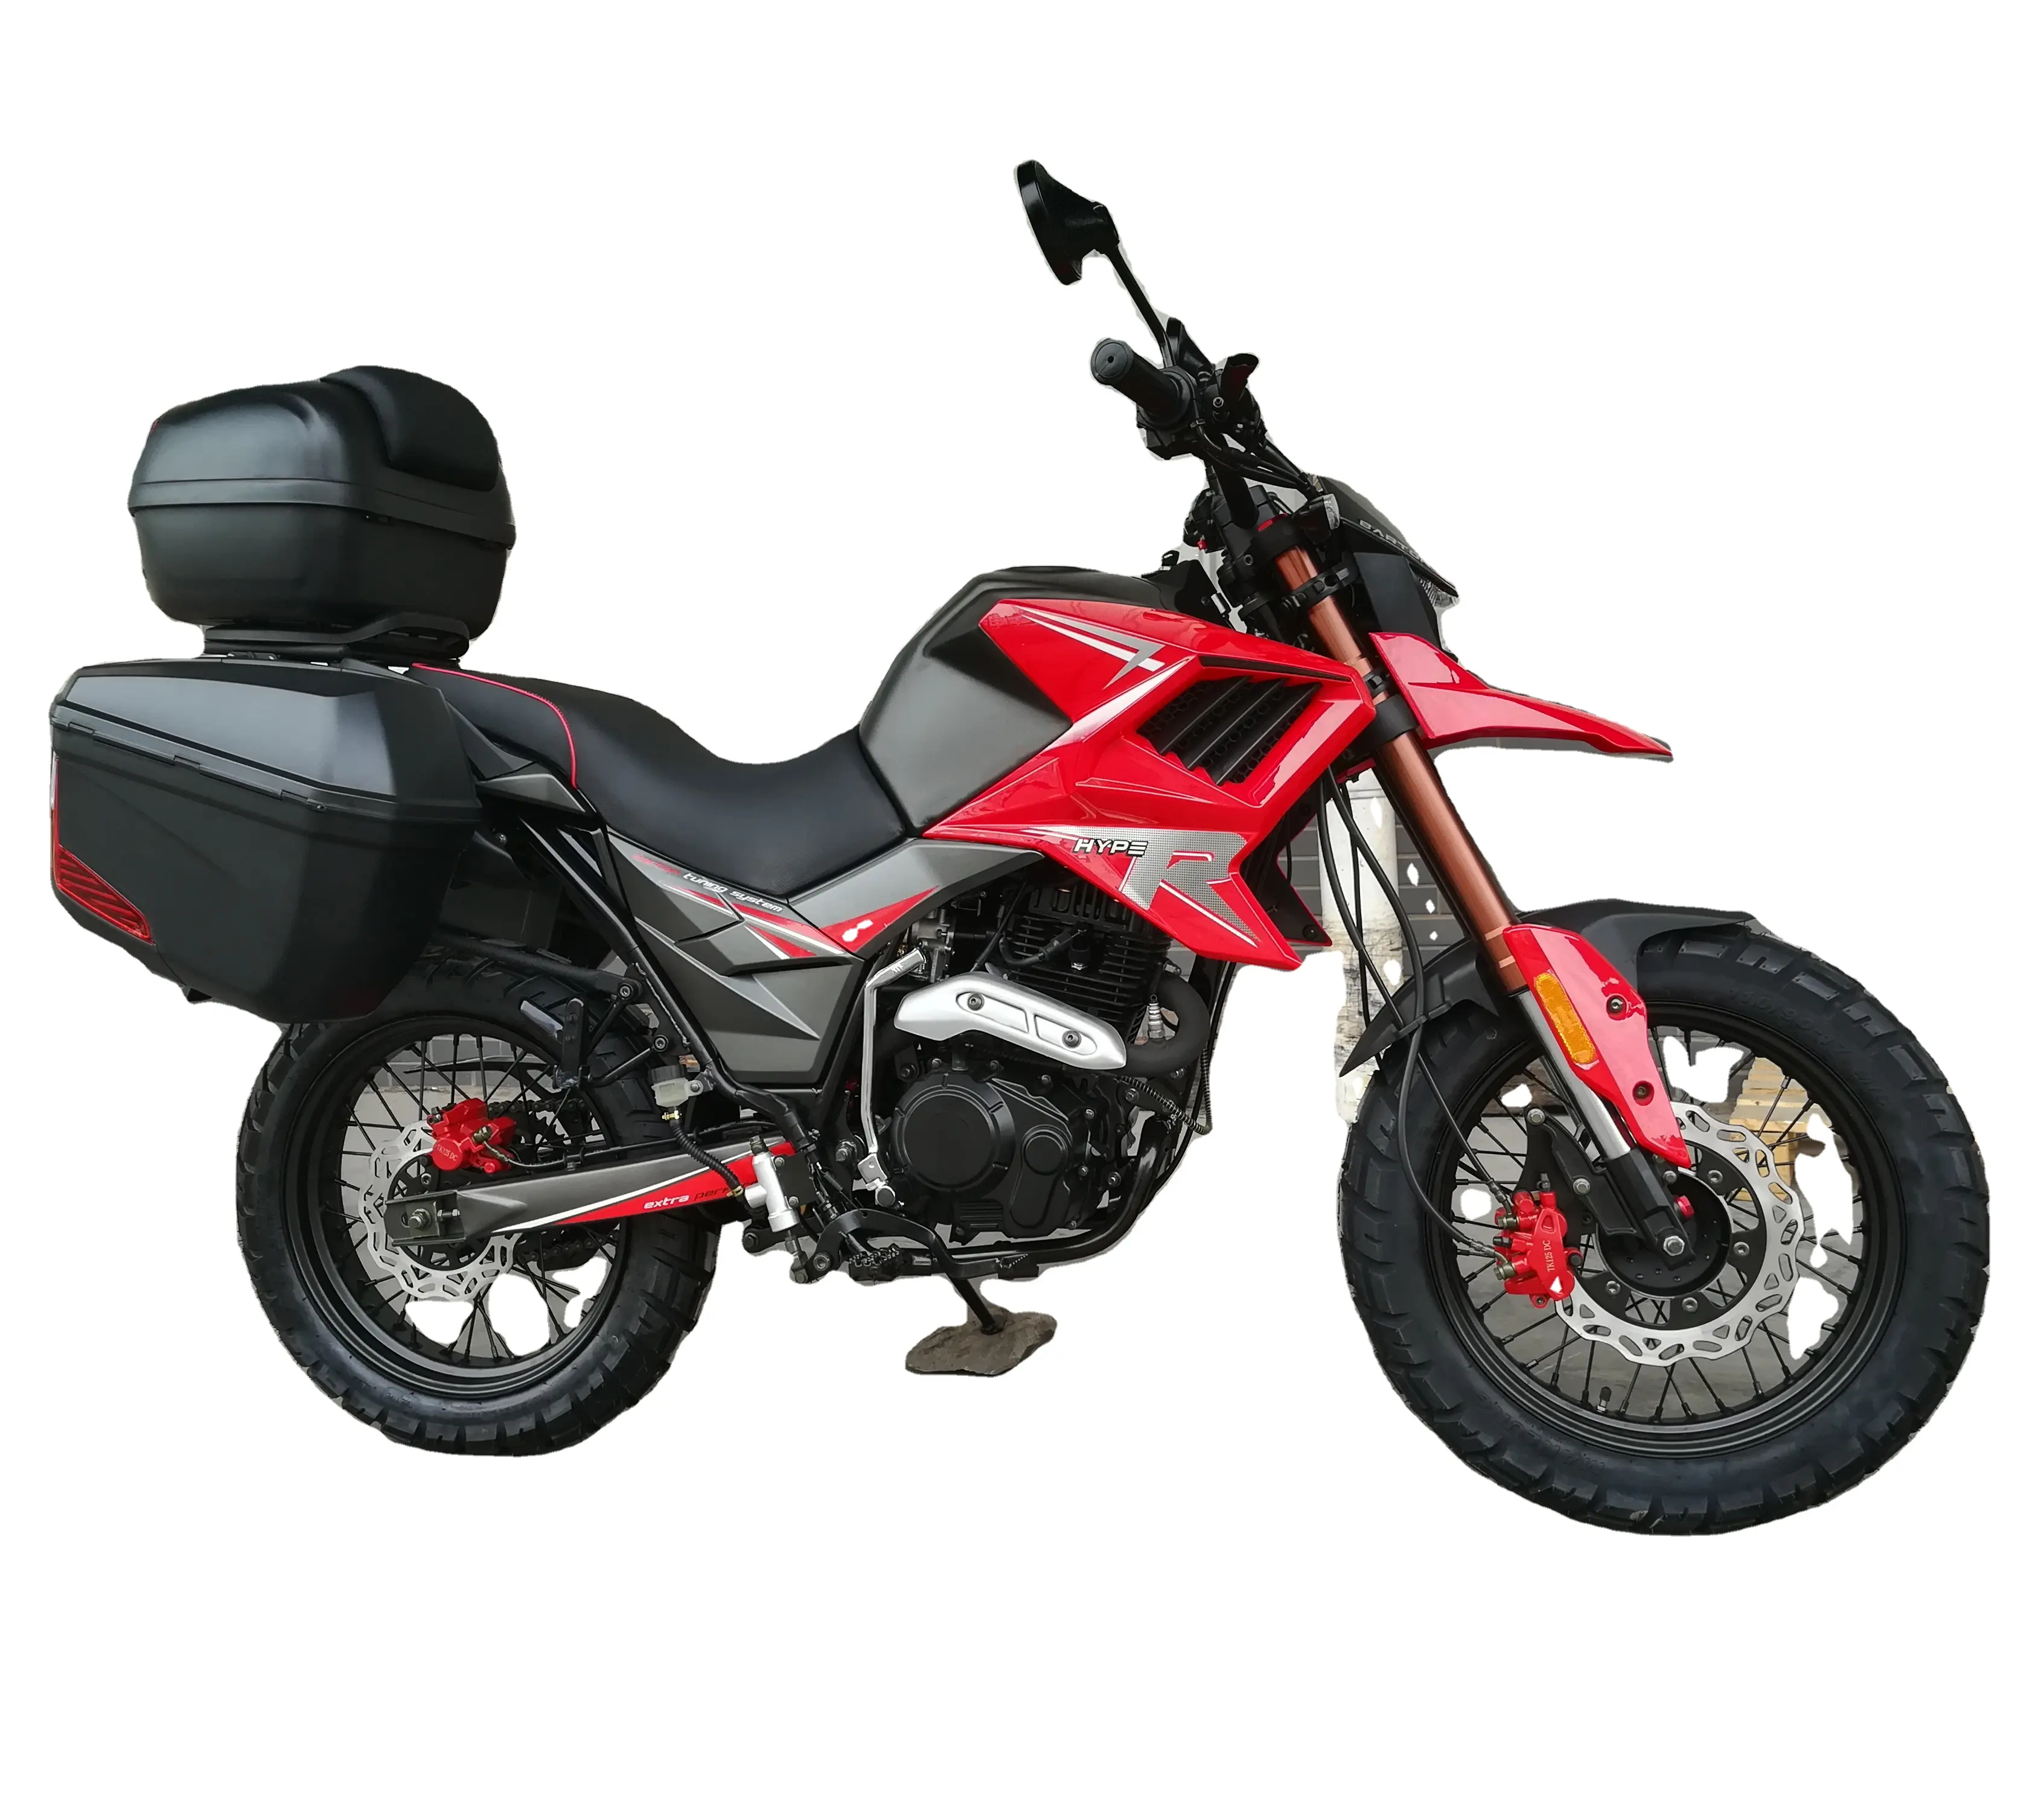 FUEGO TEKKEN 250 cheap for sale 250cc all terrain motorcycle 1119013